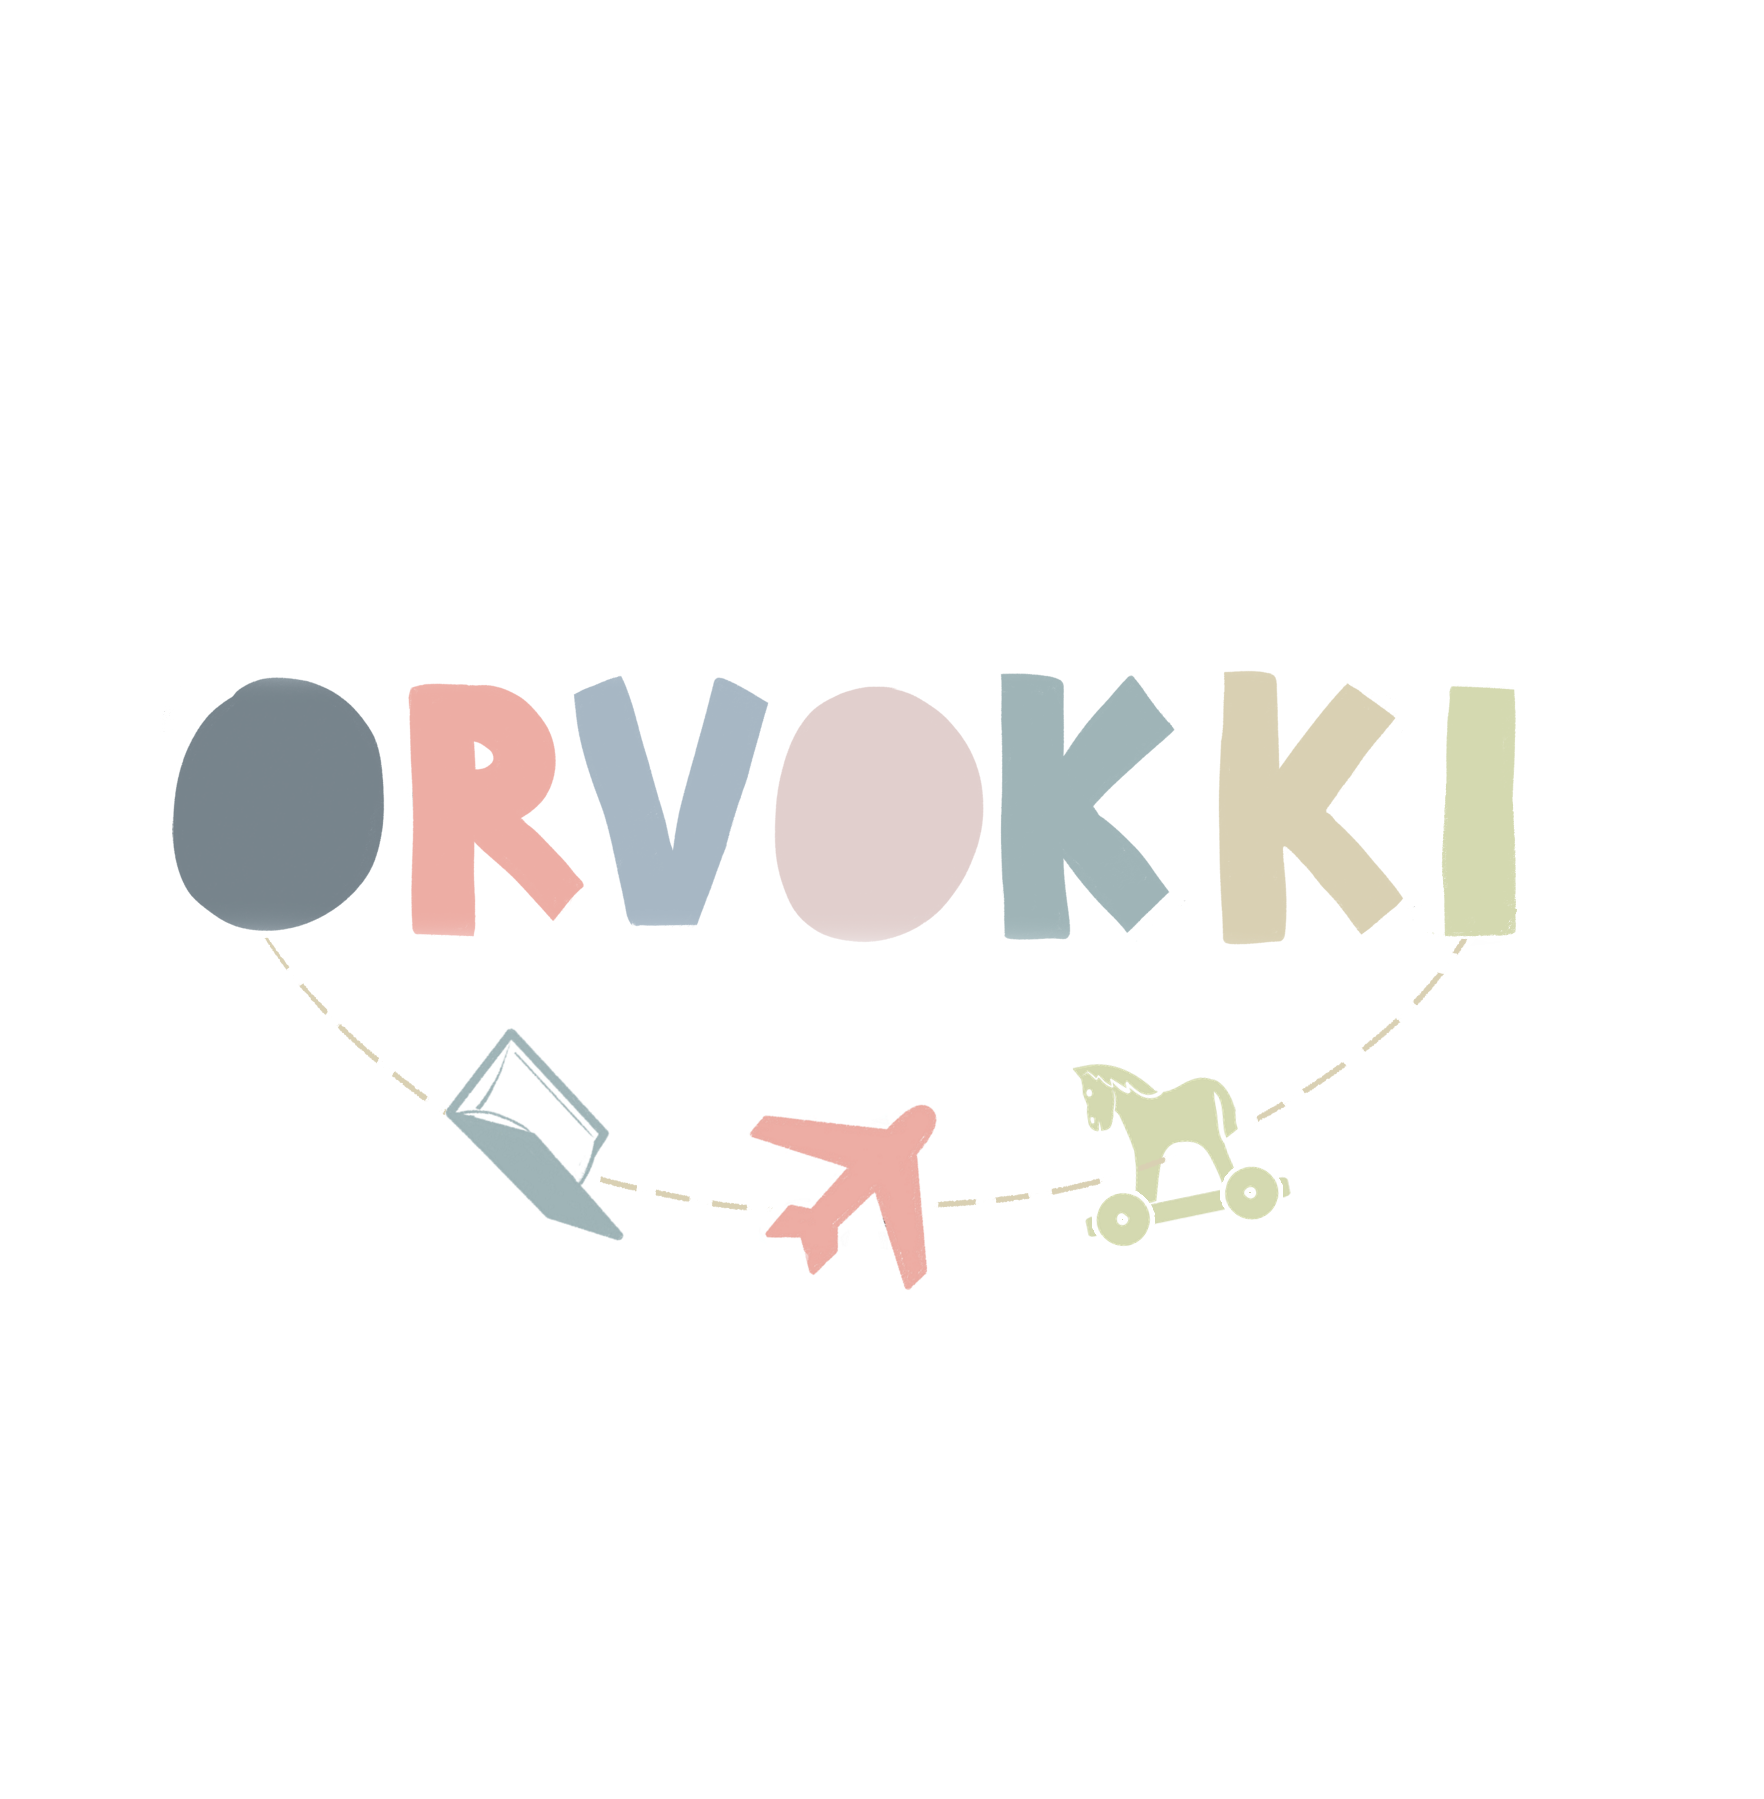 Orvokki’s blog